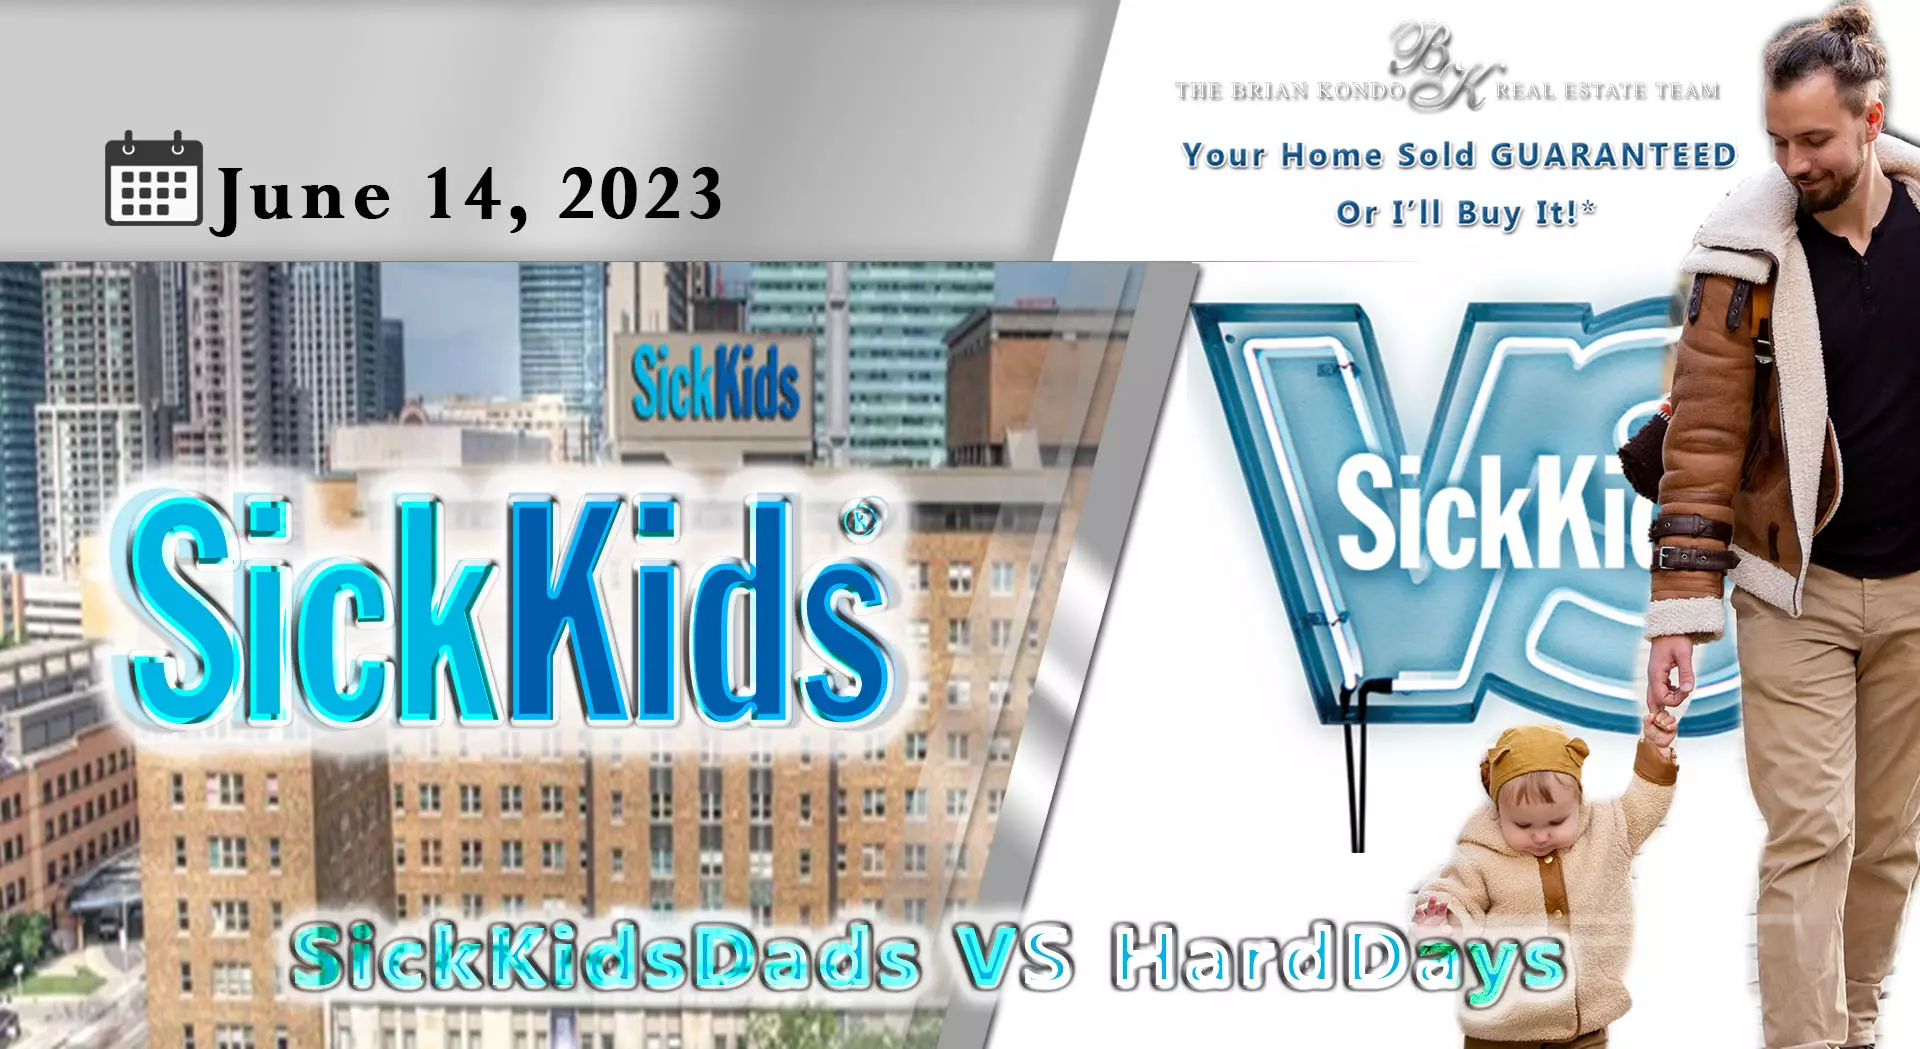 SickKids Hospital Story of The Week | SickKidsDads VS HardDays